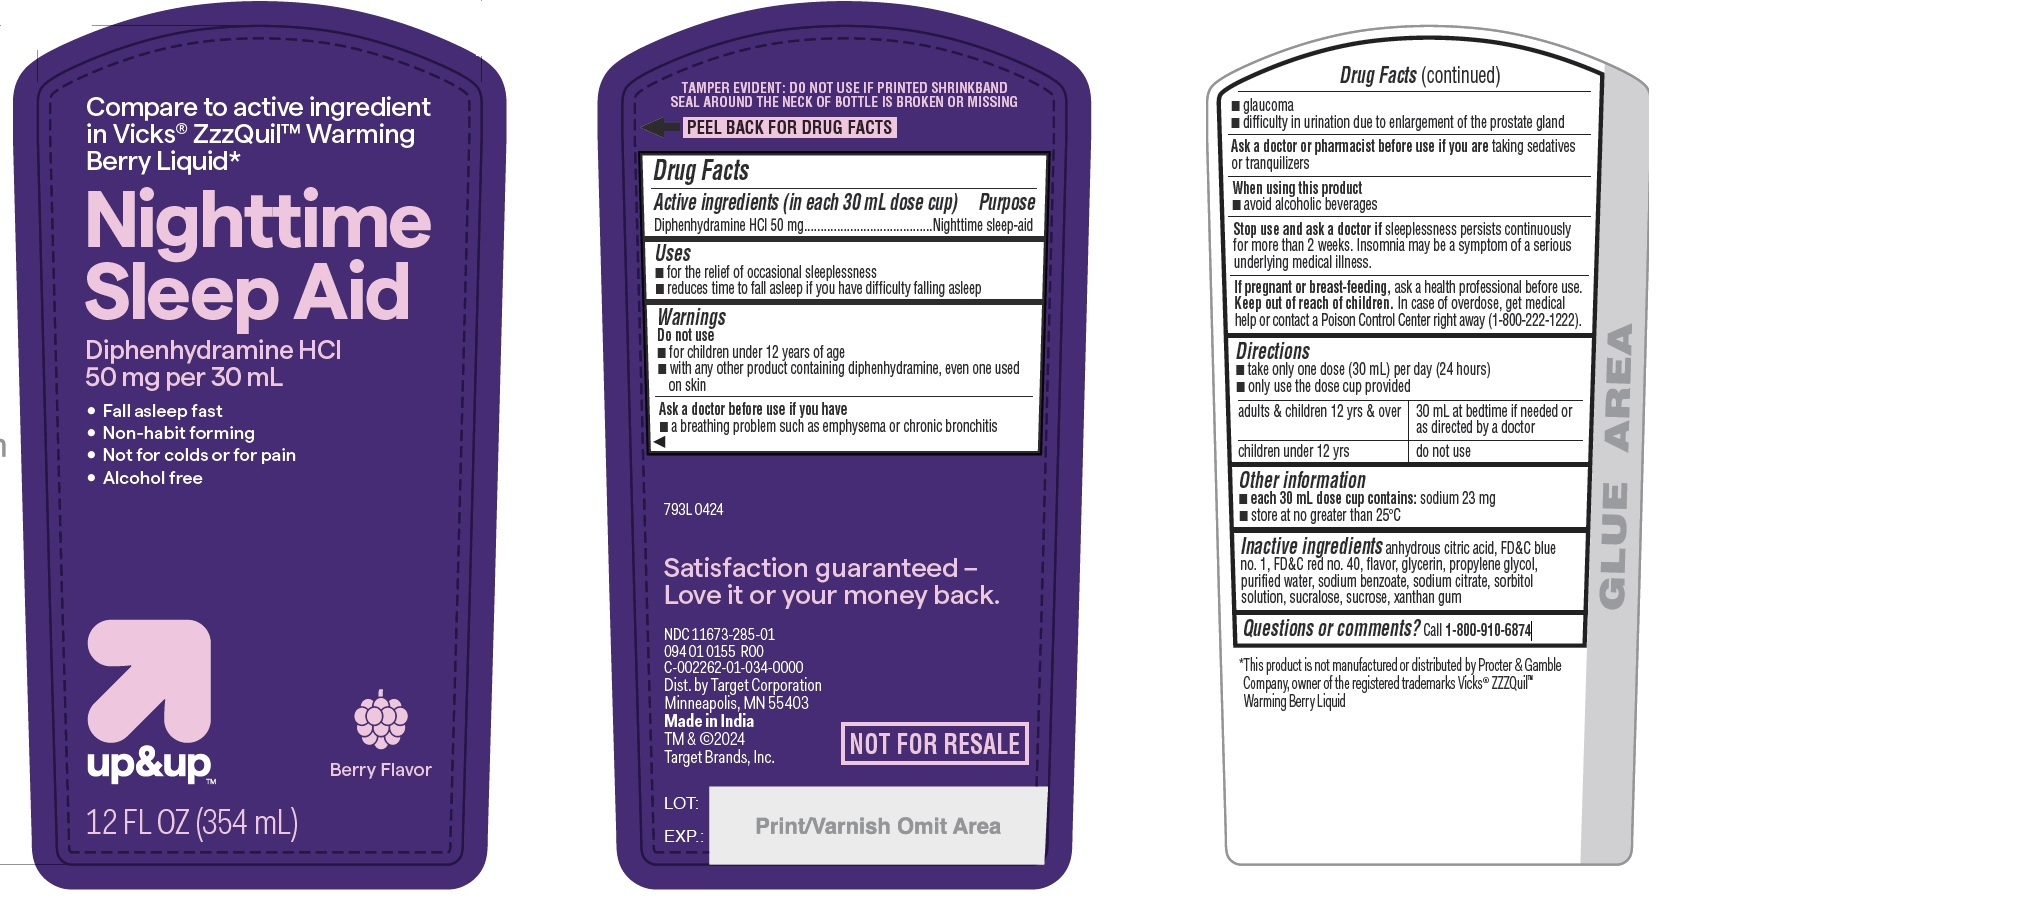 diphenhydramine-hcl-bottle-label